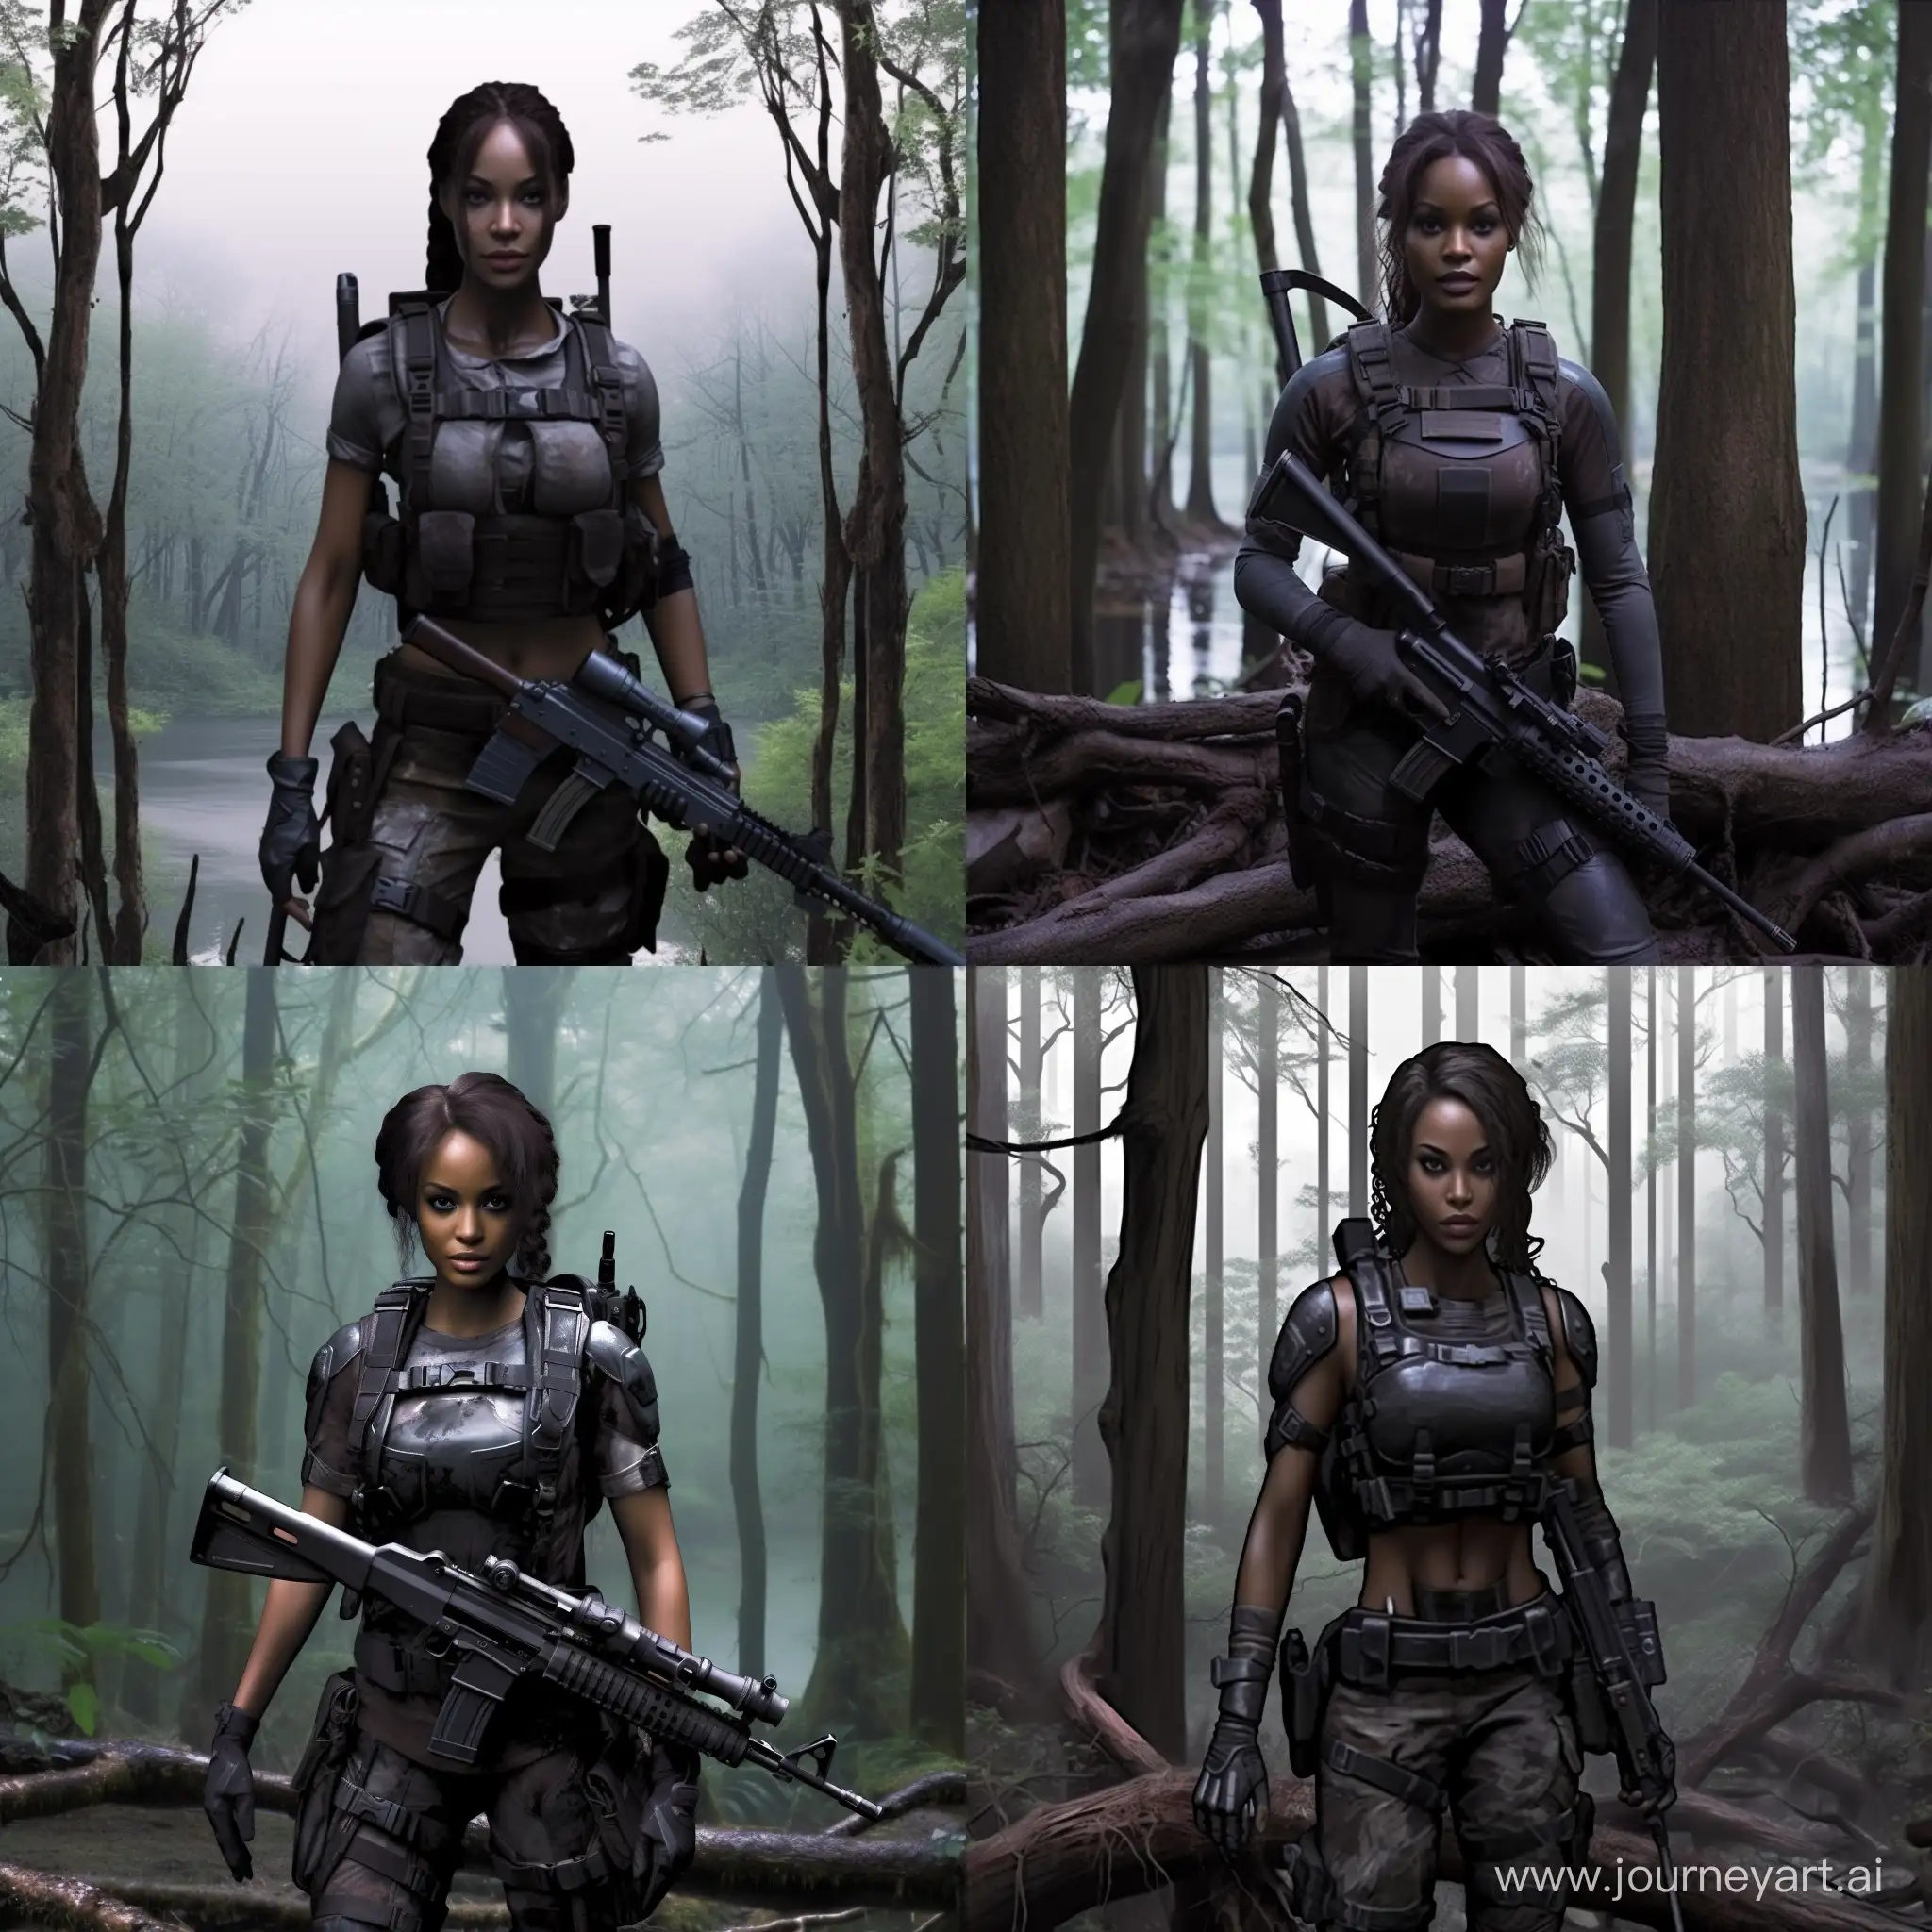 Dark-Skinned-Female-Mercenary-in-STALKER-Tactical-Gear-amid-Eerie-Forest